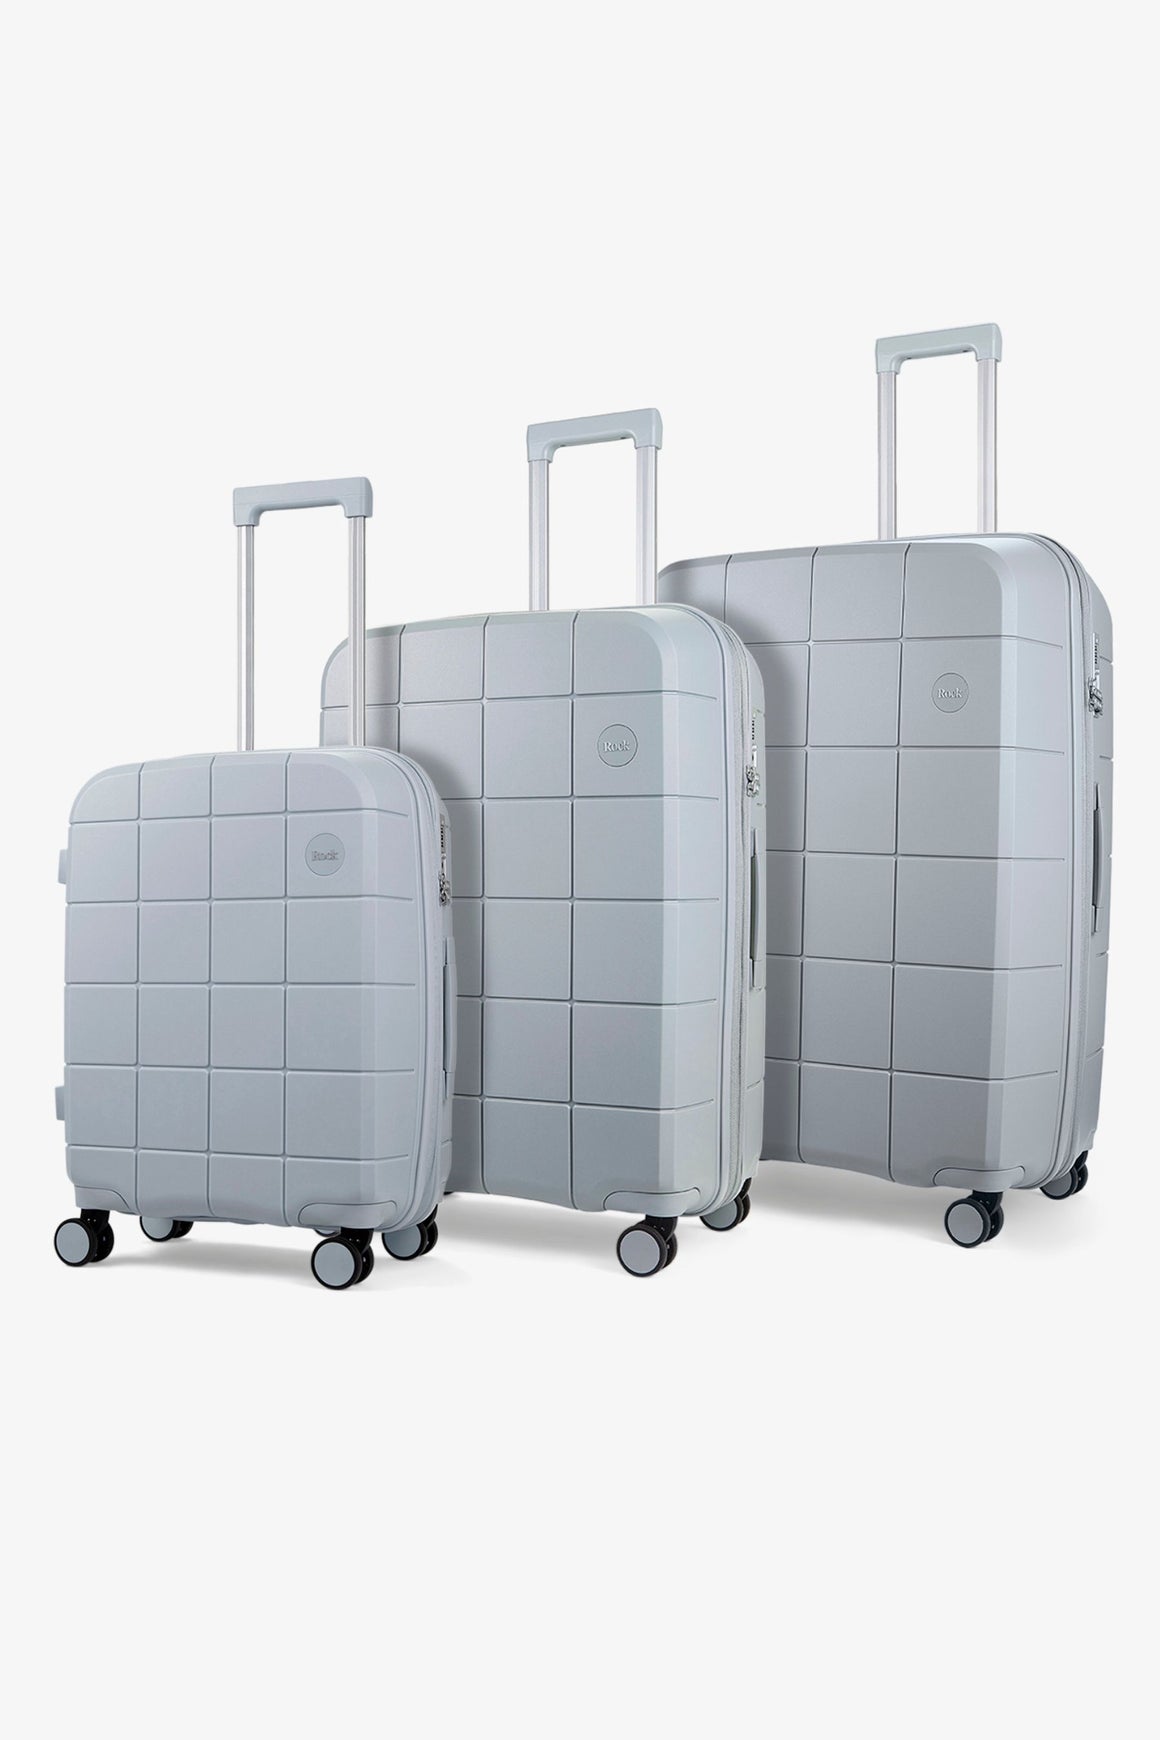 Pixel Set of 3 Suitcase